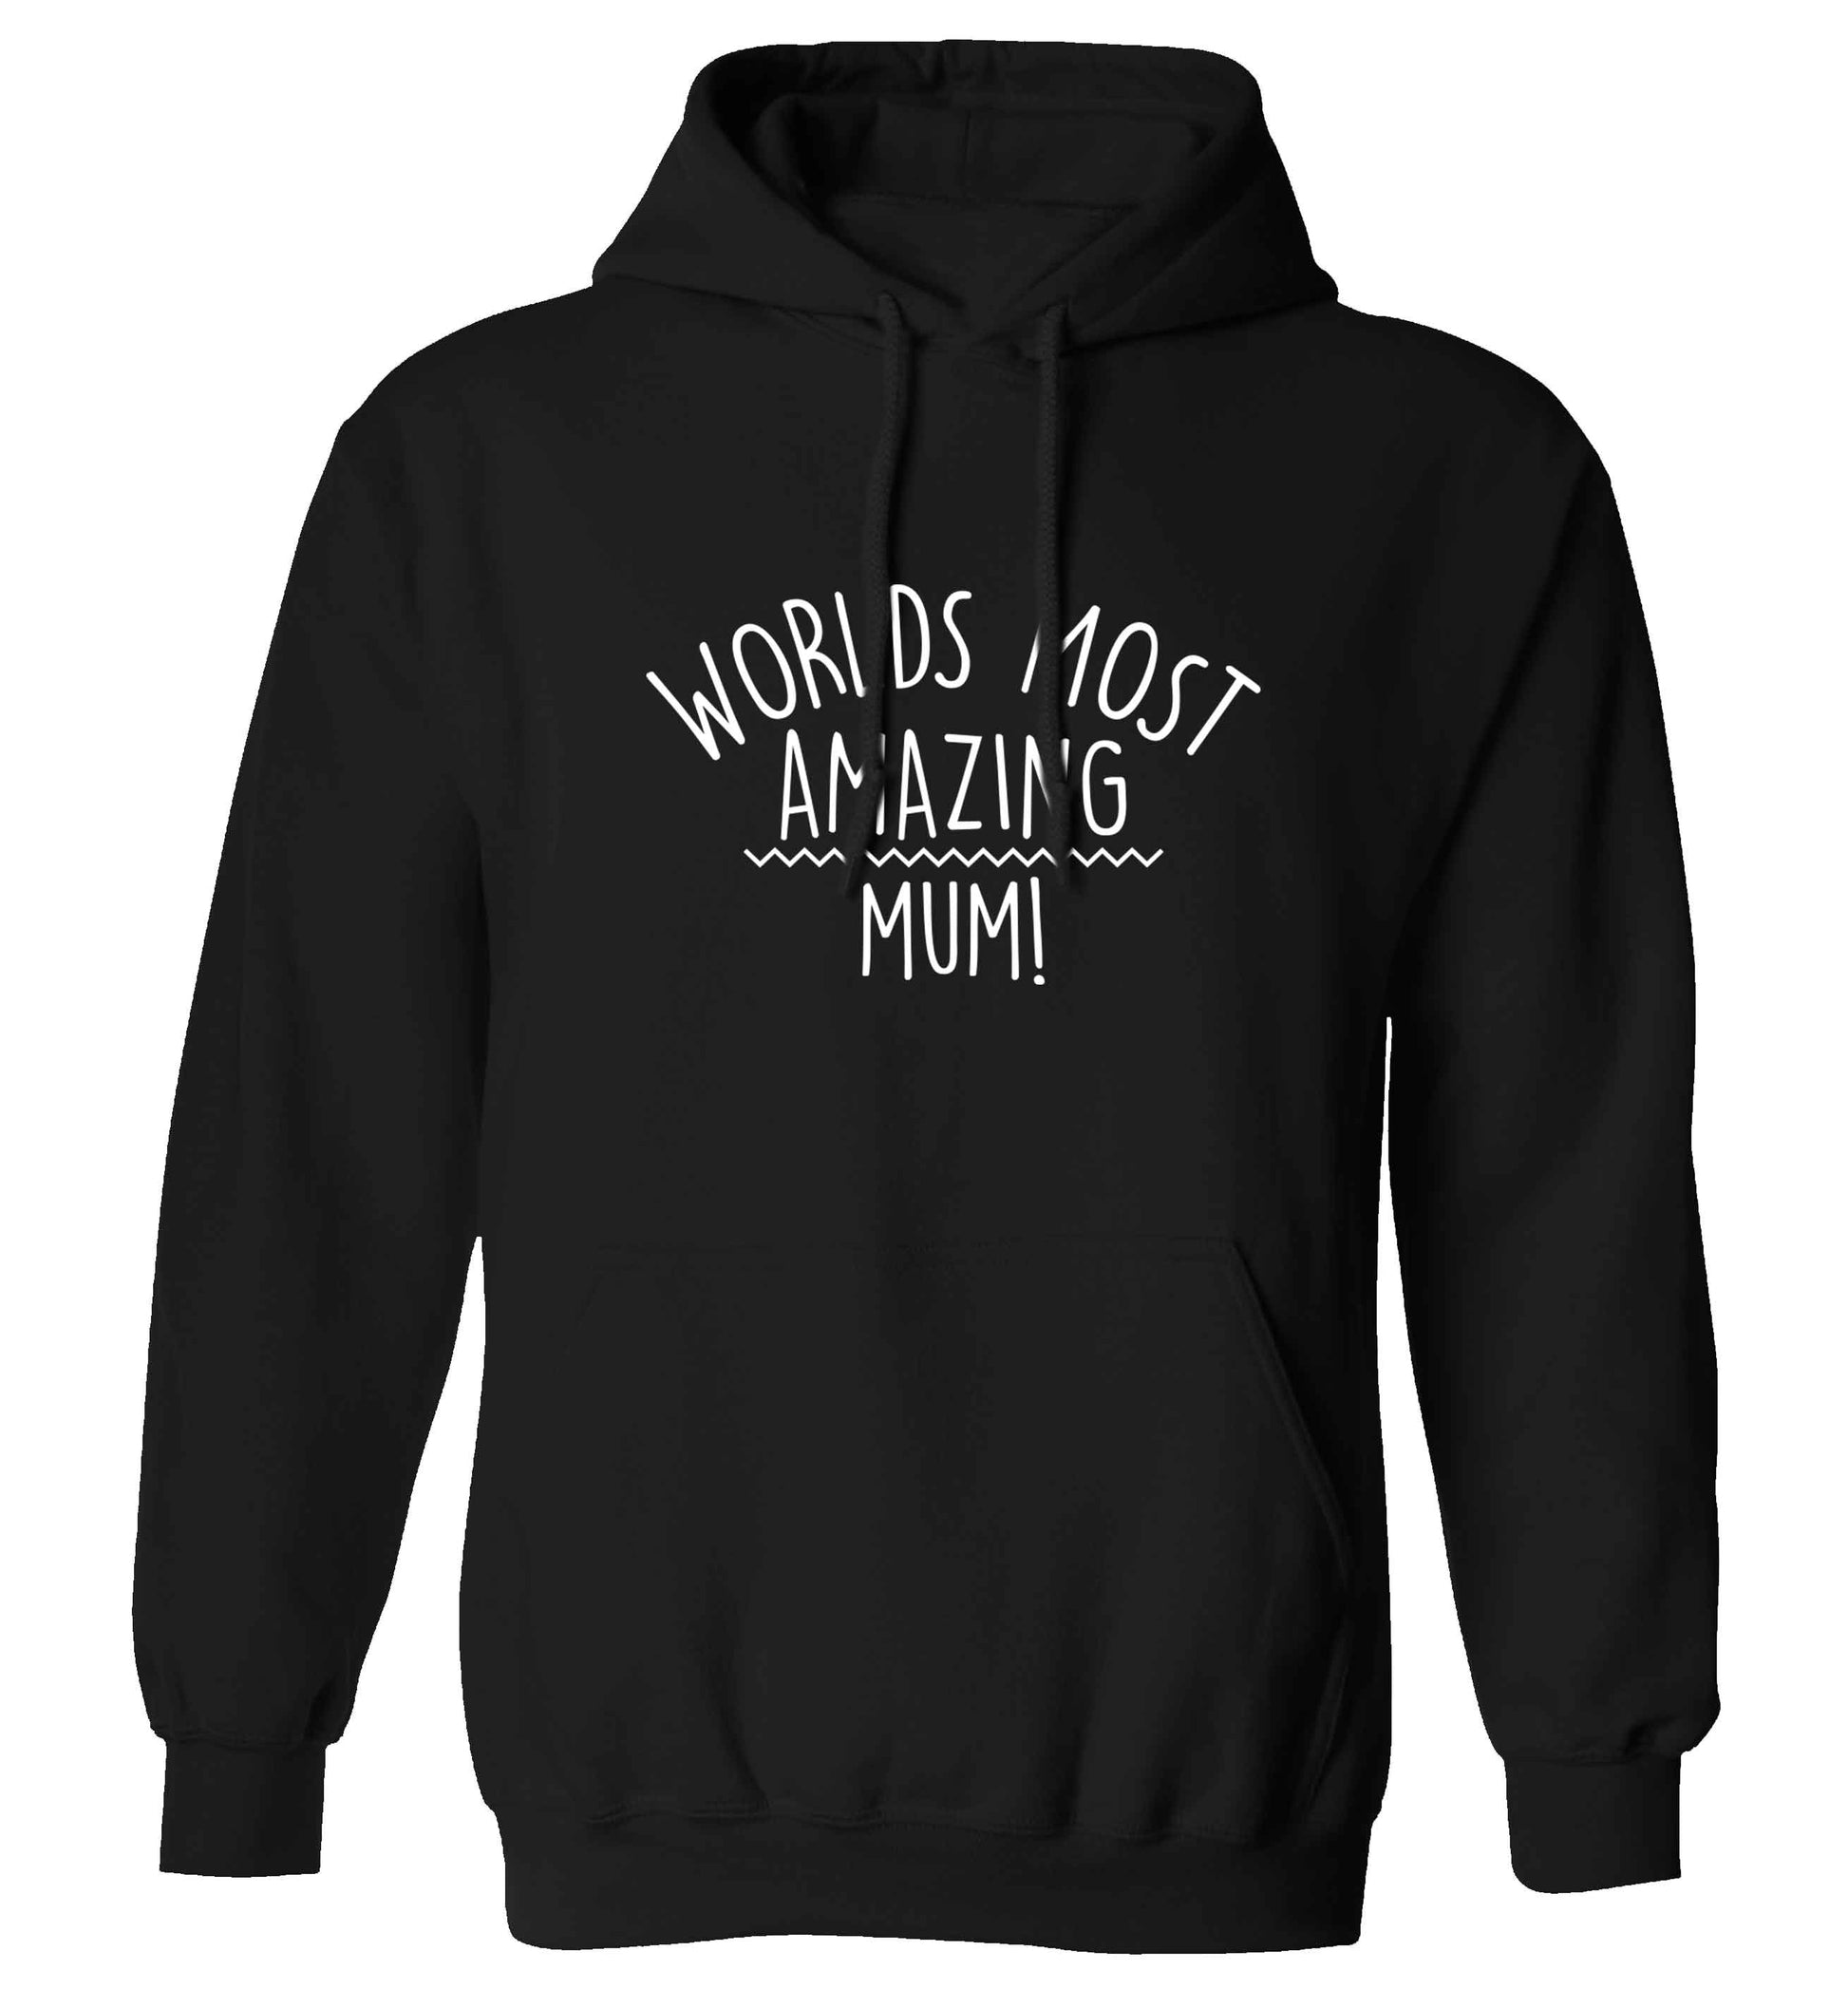 Worlds most amazing mum adults unisex black hoodie 2XL